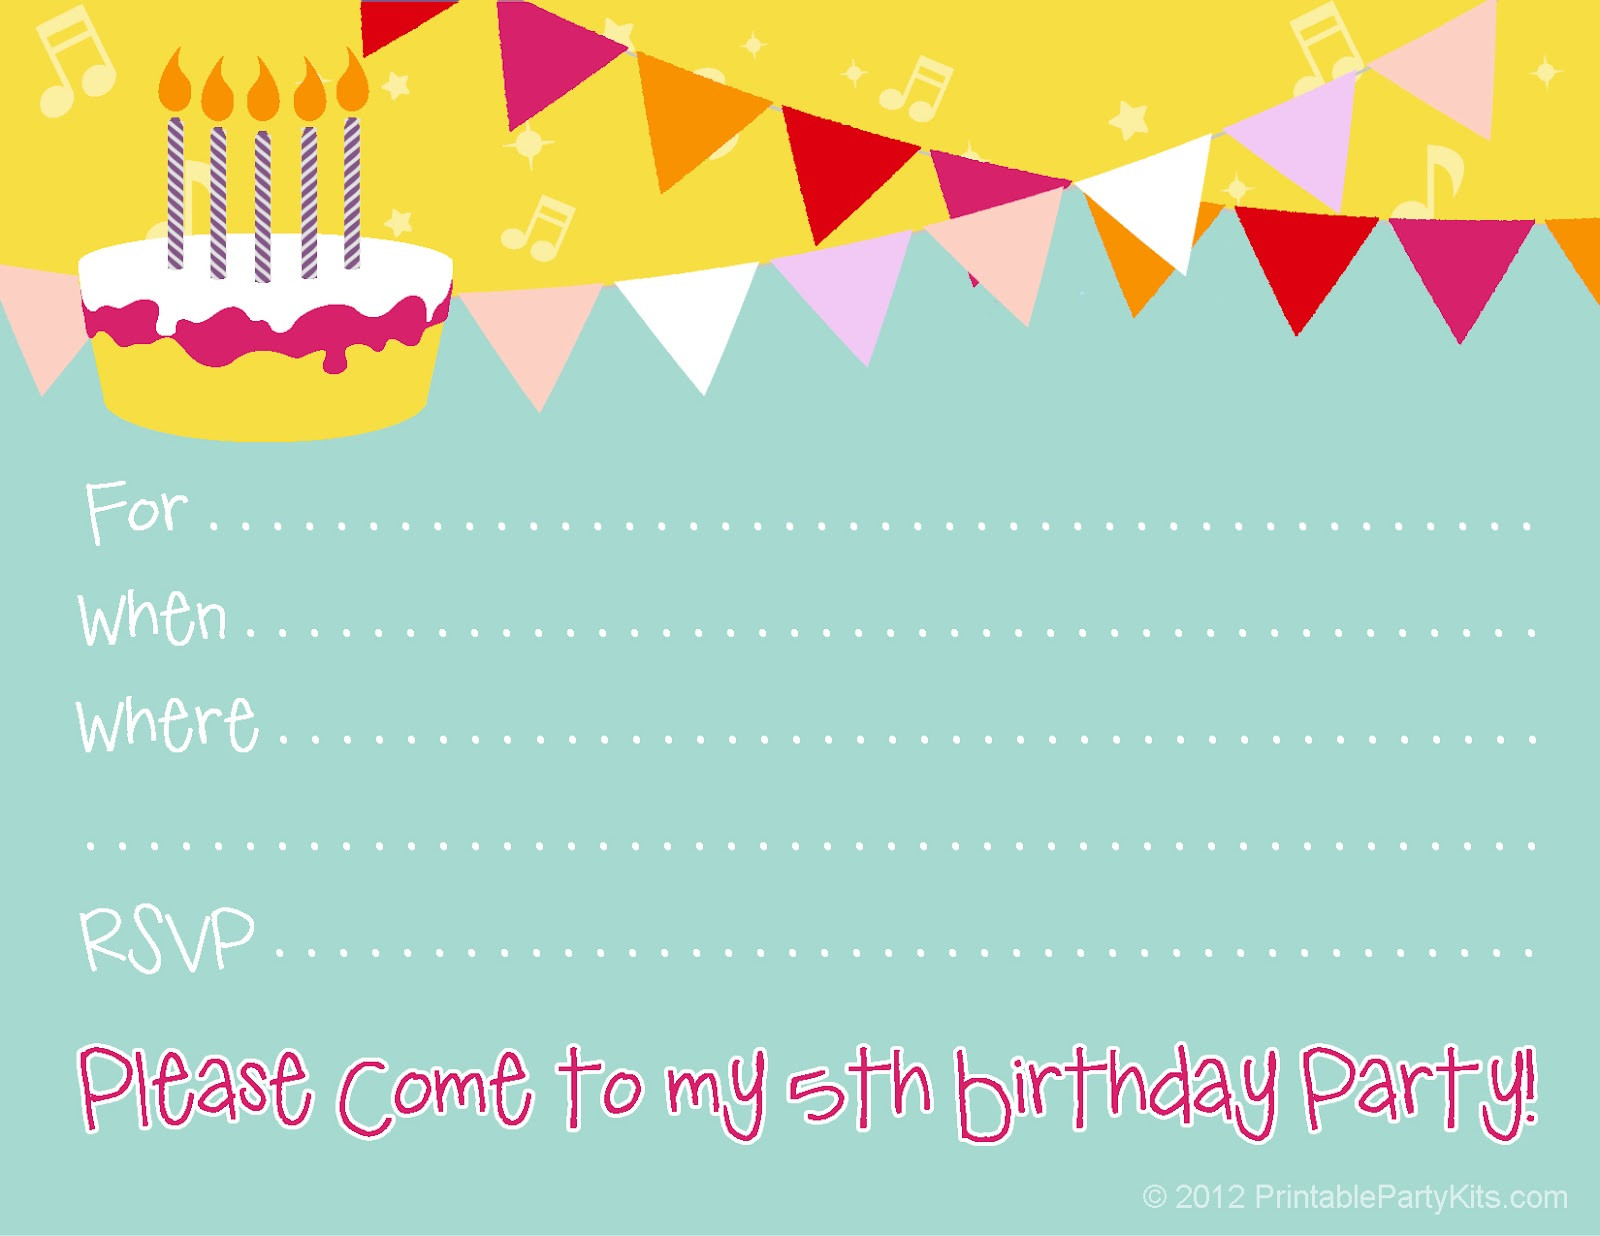 Free Birthday Party Invitations
 Birthday Party Invitations Free – FREE Printable Birthday